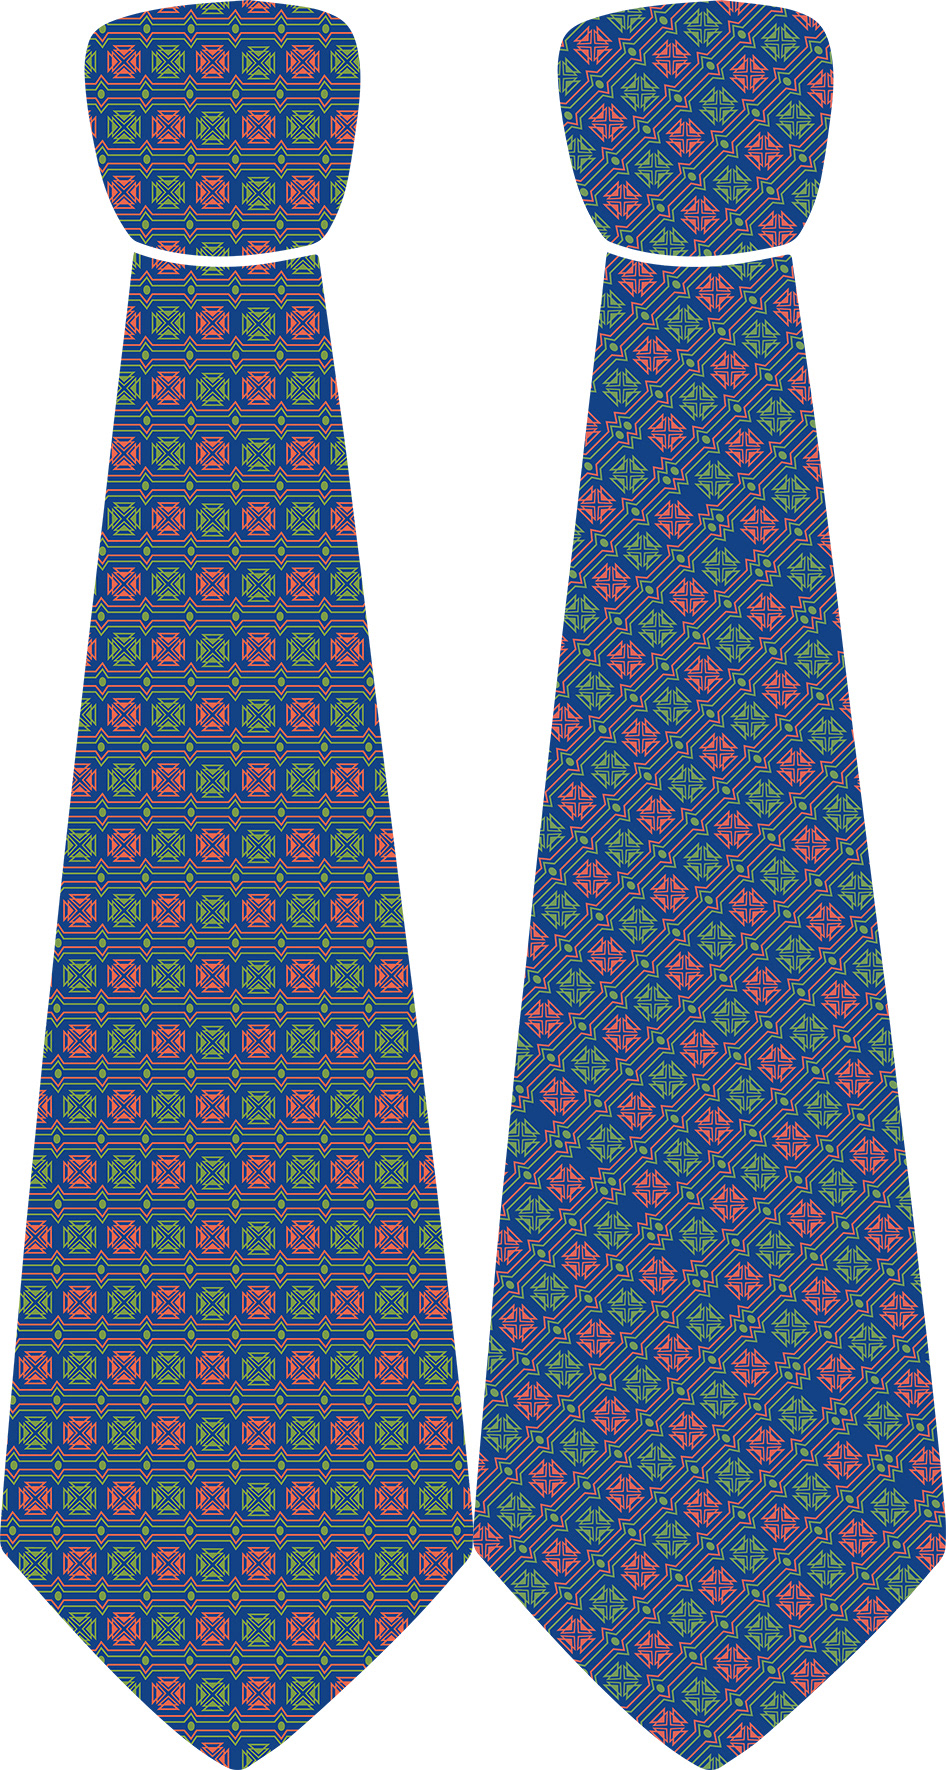 universal industries scarves Patterns ethiopia bold Colourful  Duty Free Pattern Work Daniel Bevis TIES print